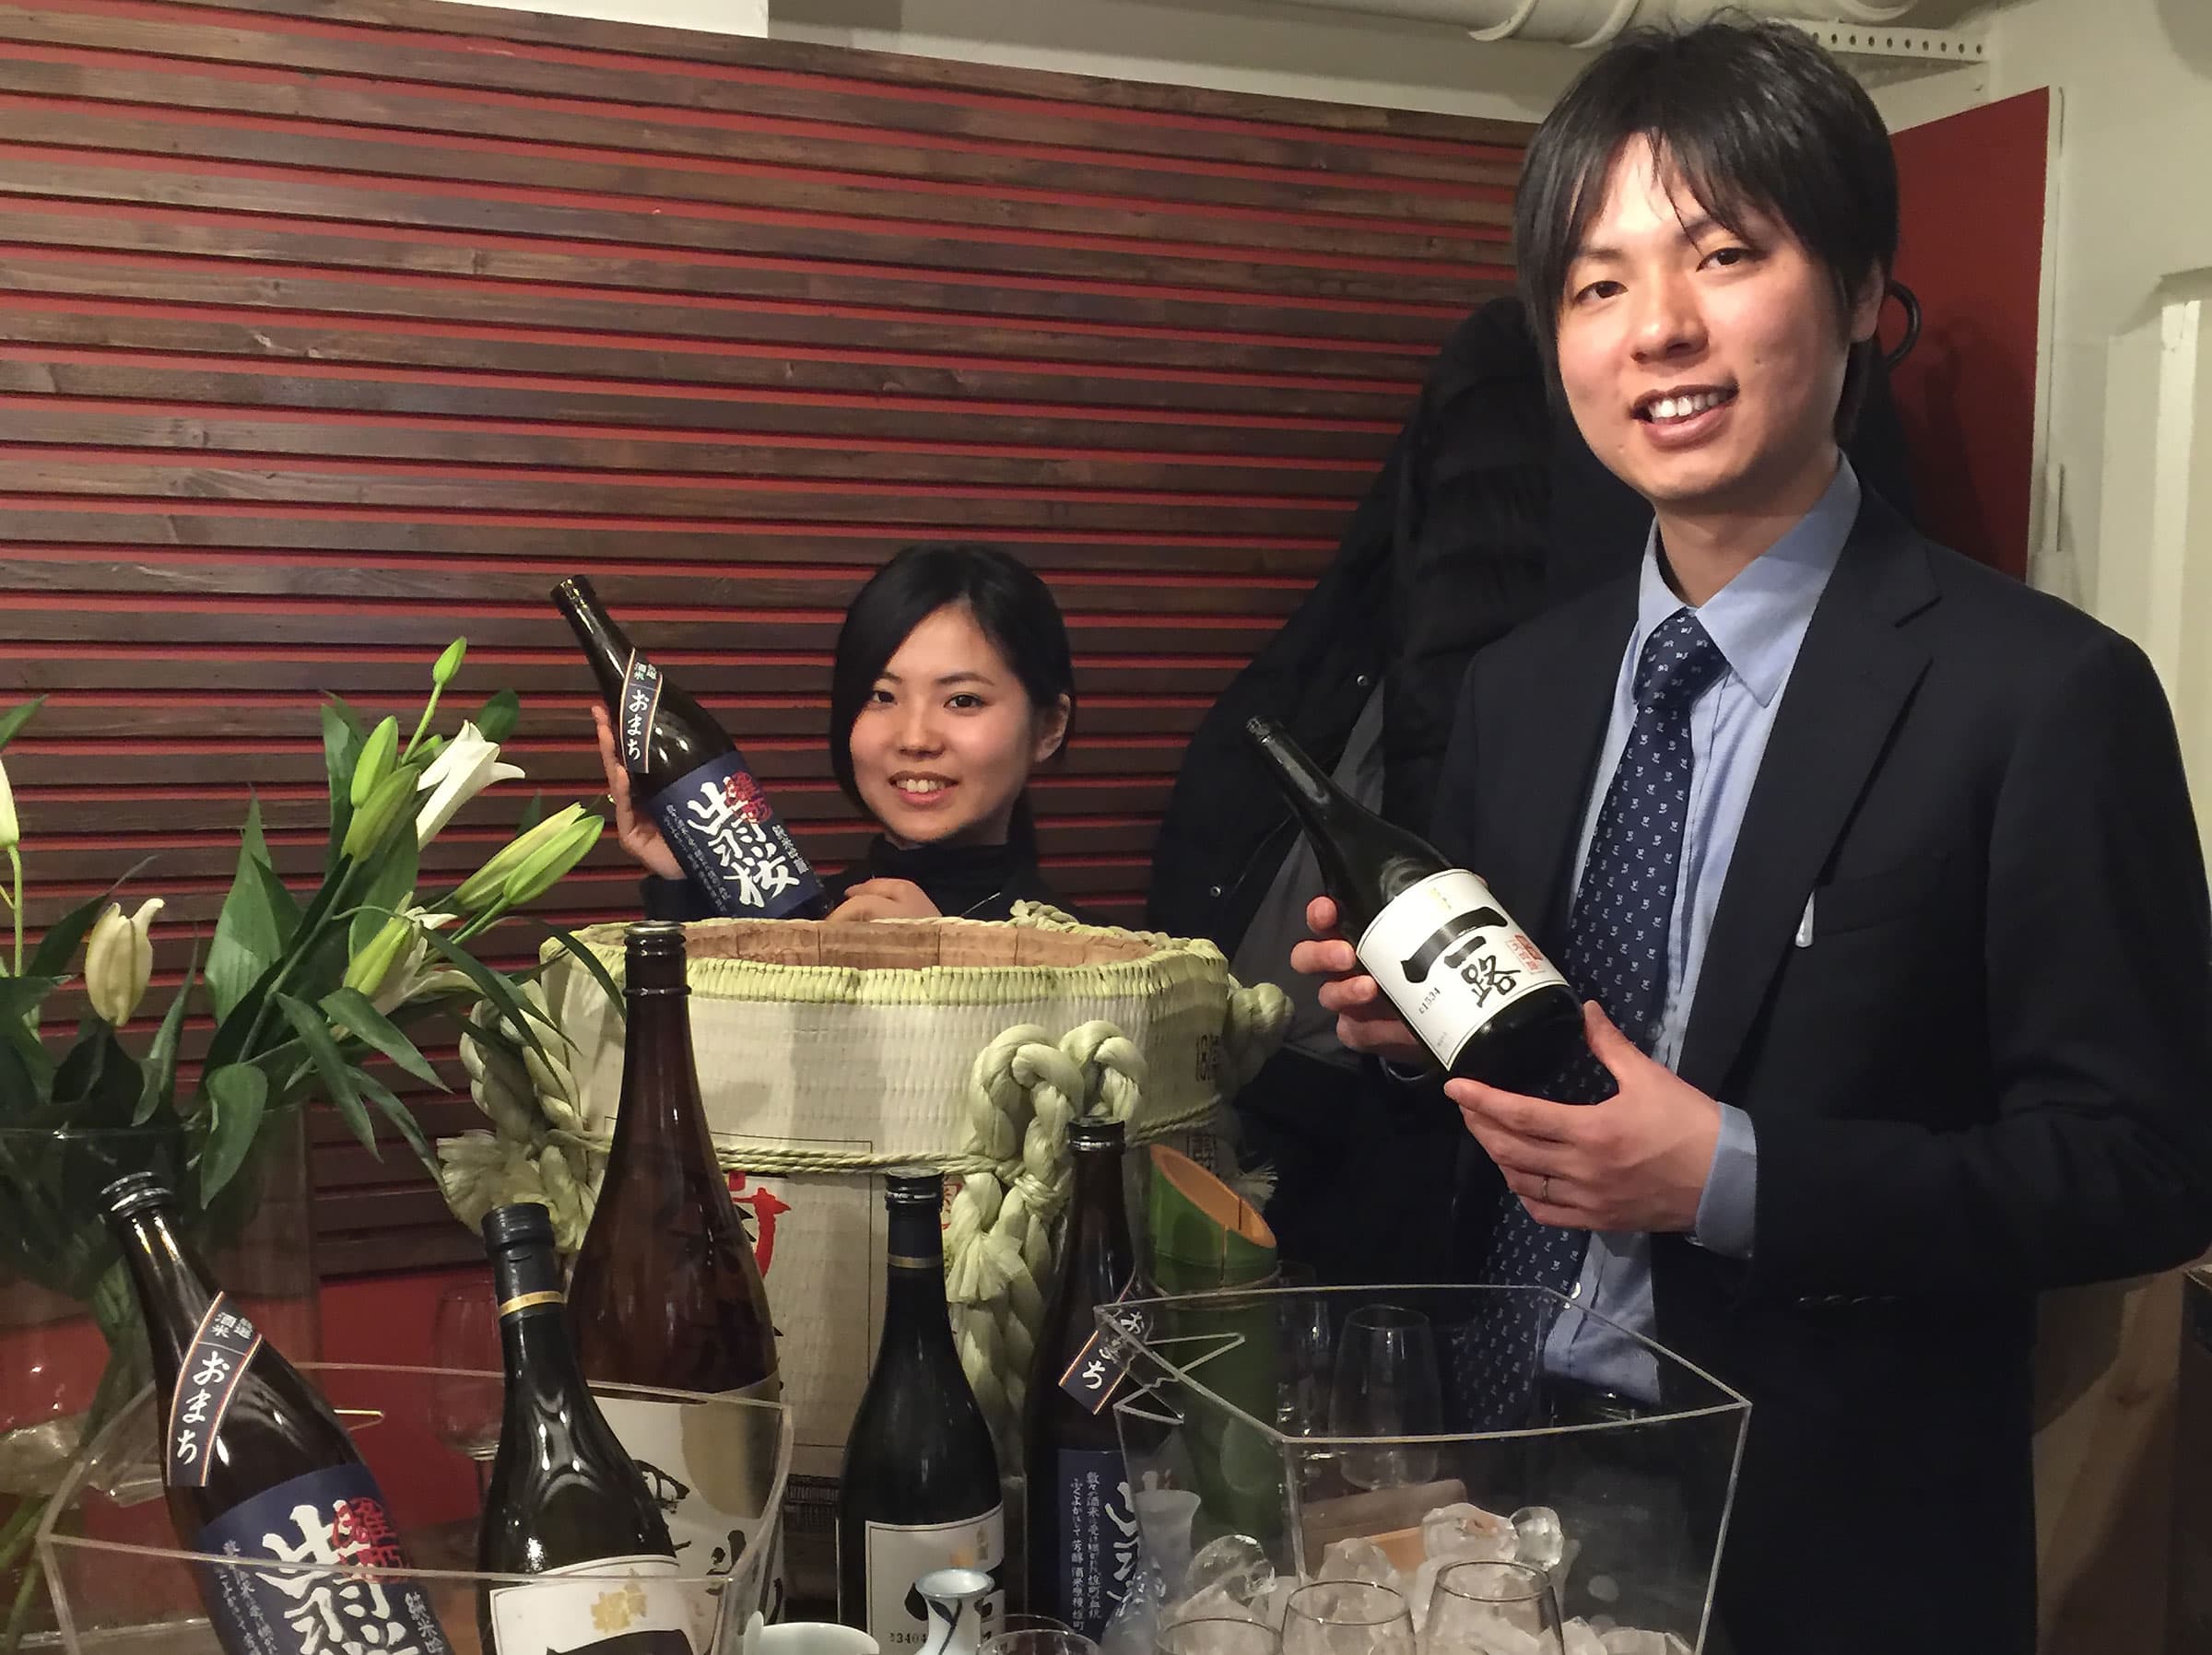 Japanskt sakebryggeri gästar TAK